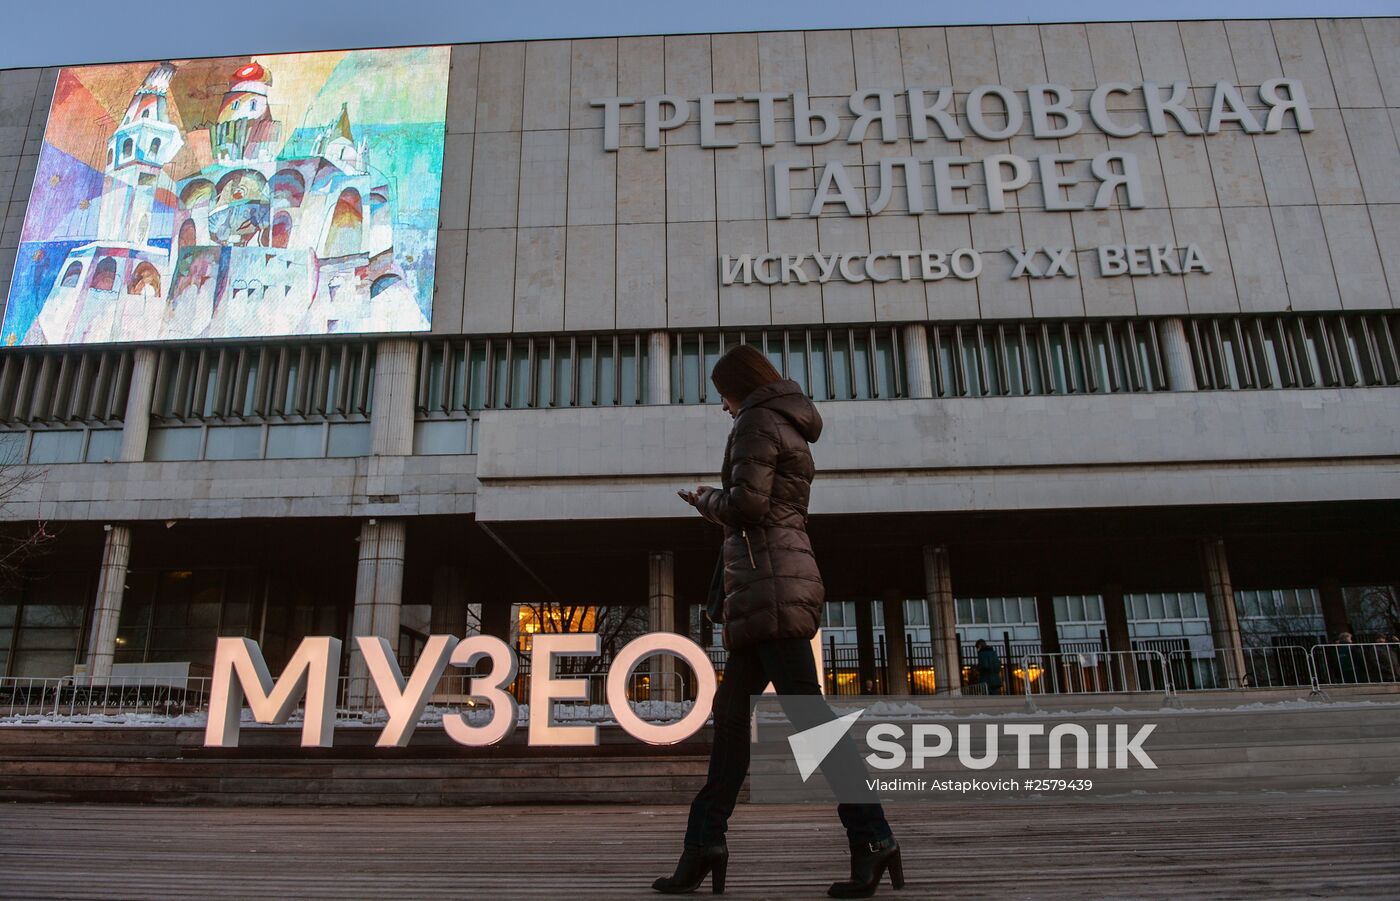 Multimedia exhibition on 20 century art on museum facades opens in Tretyakov Gallery